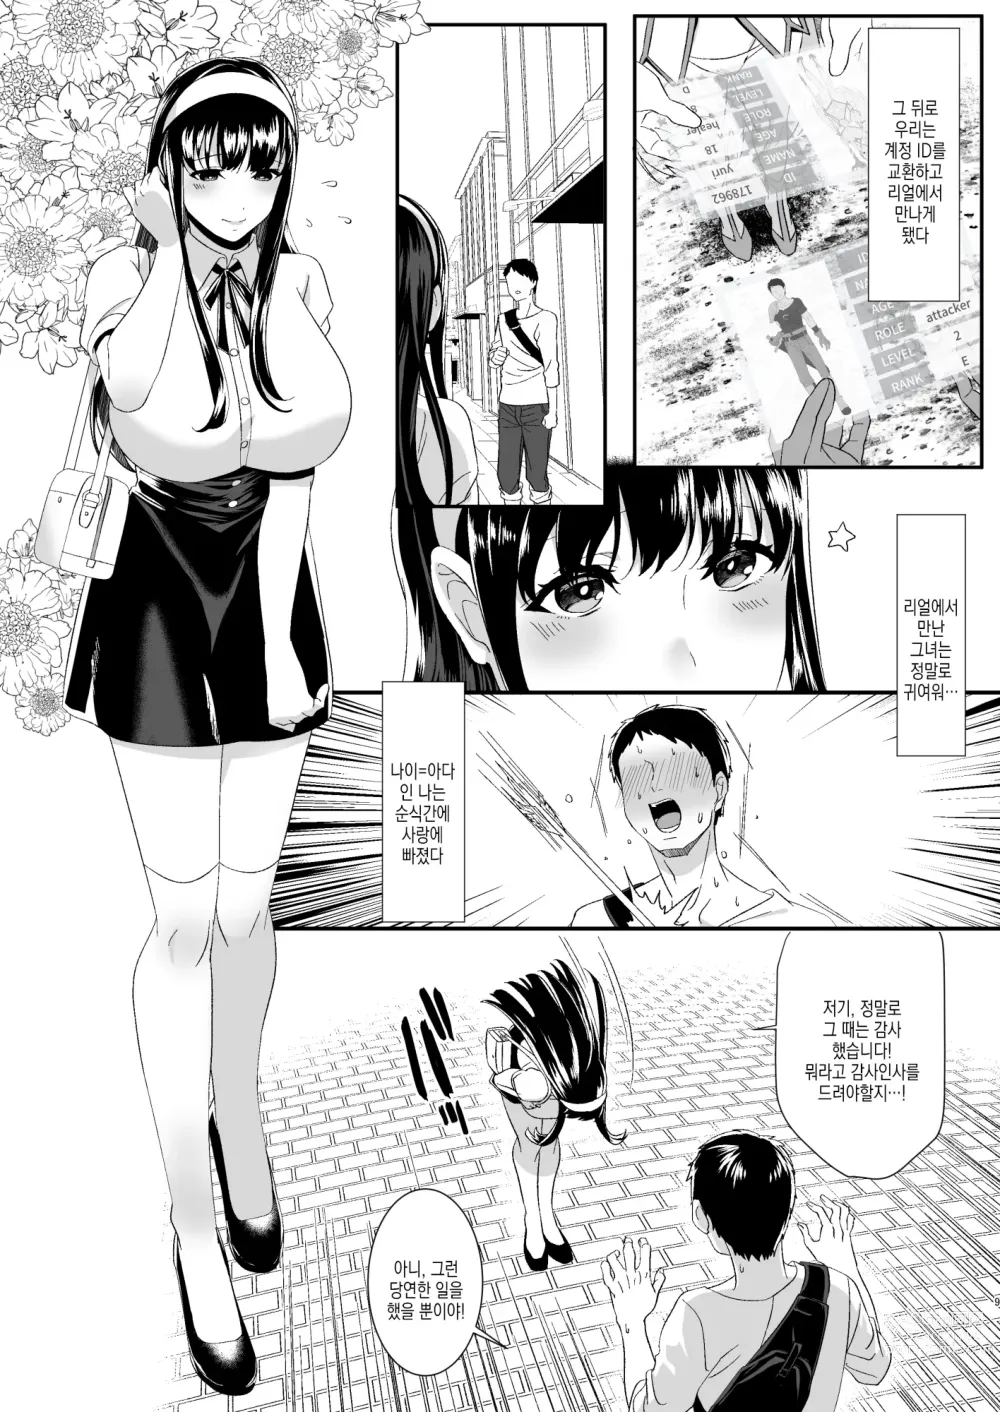 Page 10 of doujinshi 온라인 게임에서 만난 여친이 고렙한테 네토라레당하는 이야기